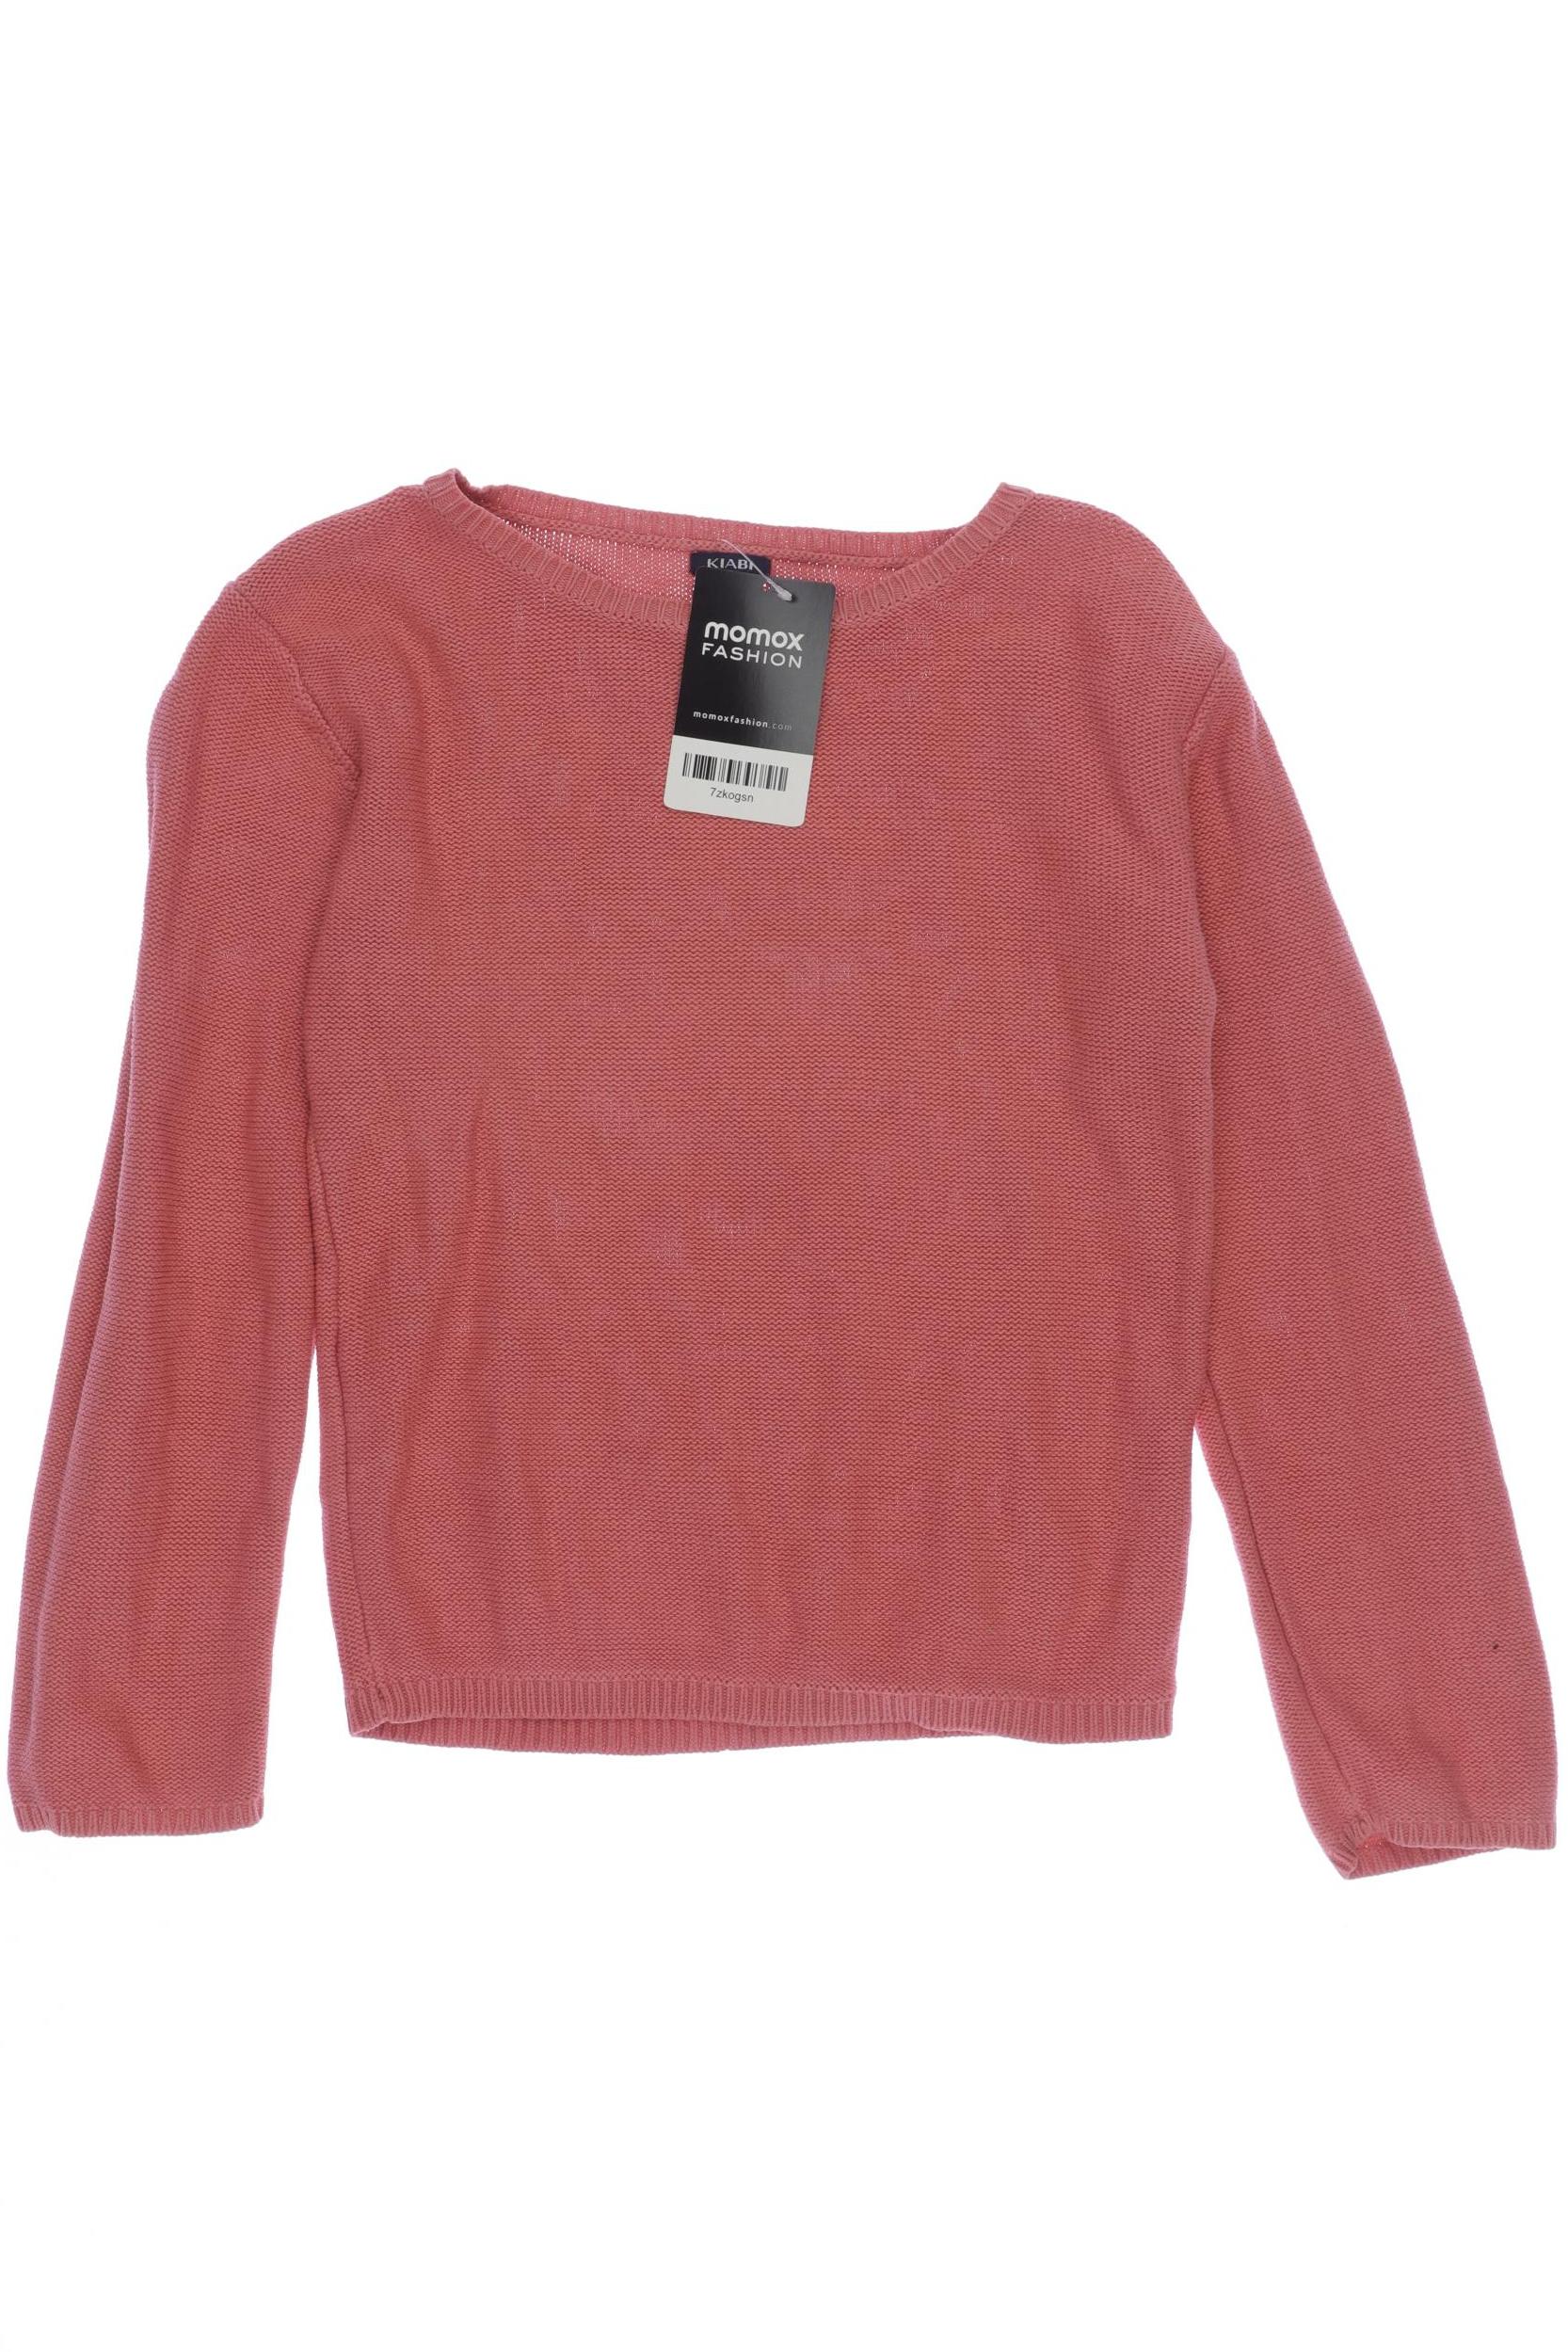 Kiabi Damen Pullover, pink, Gr. 128 von Kiabi